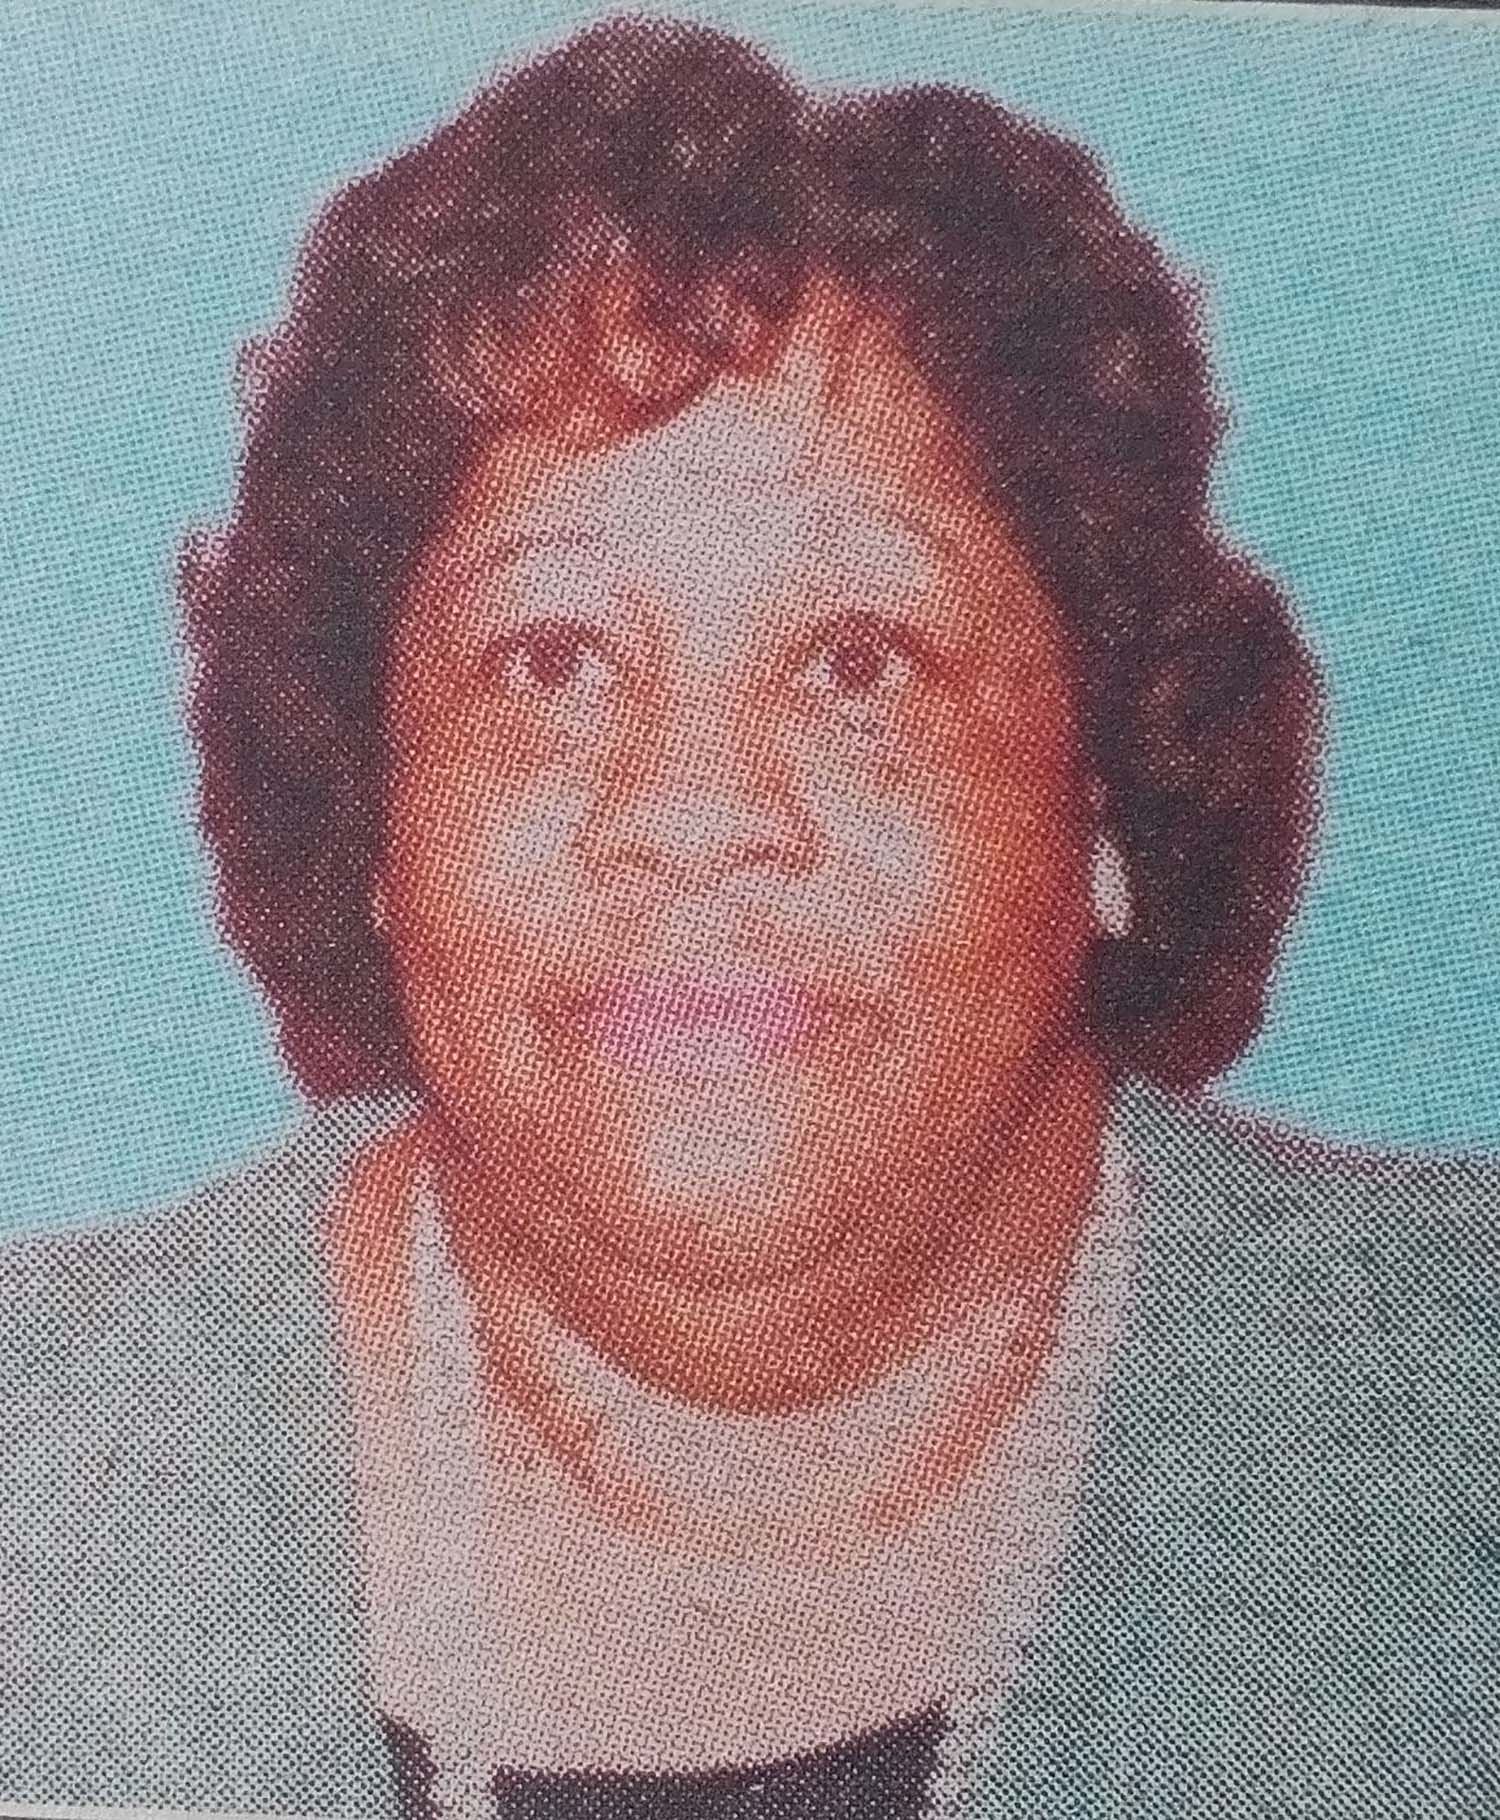 Obituary Image of Martha Ann Wailer Muchori